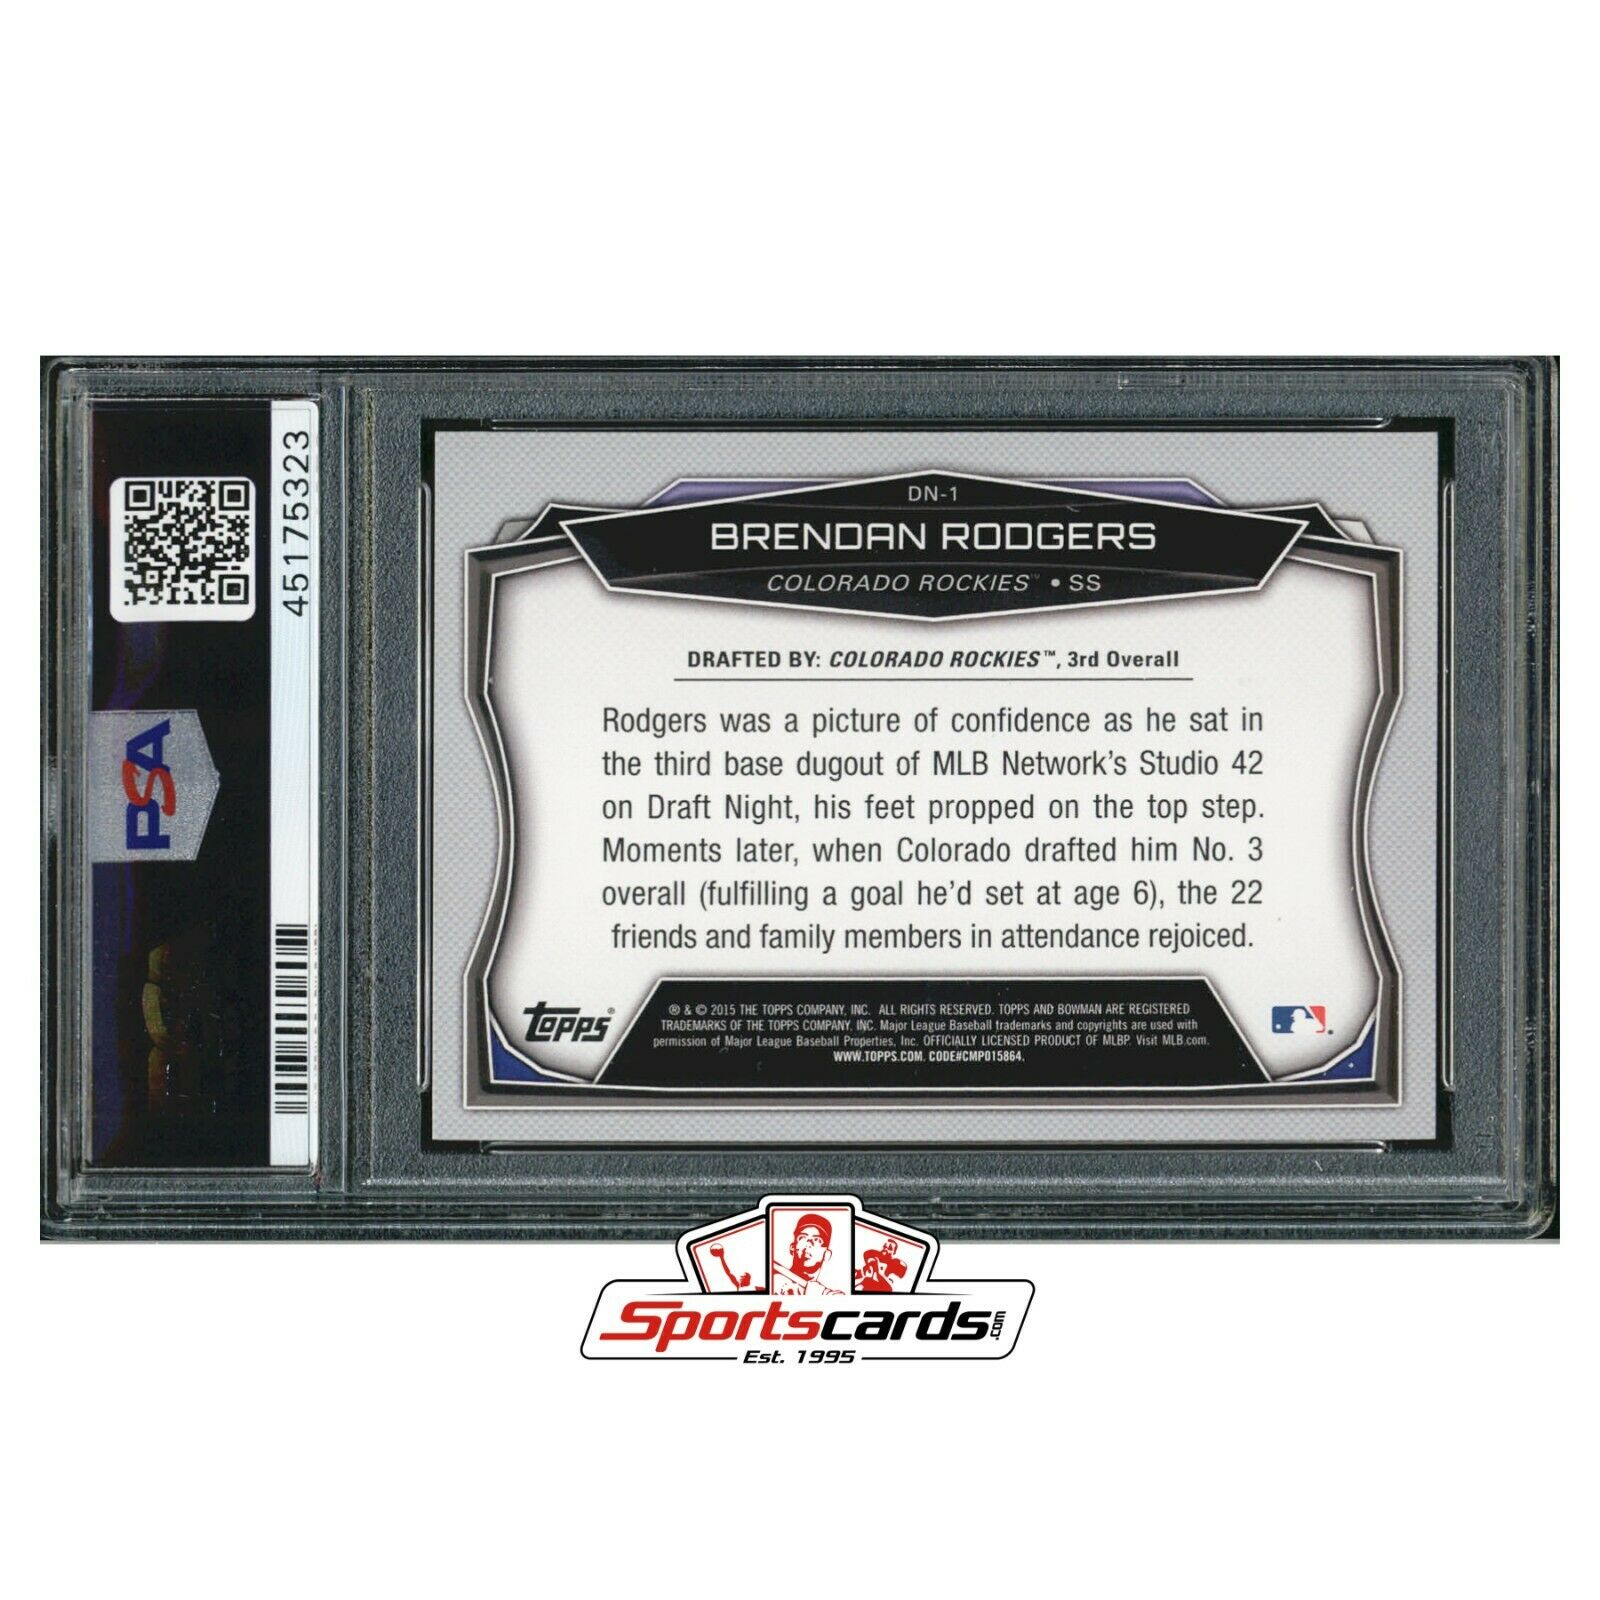 Brendan Rodgers 2015 Bowman Draft Signed Card PSA/DNA Gem MT 10  Auto 10